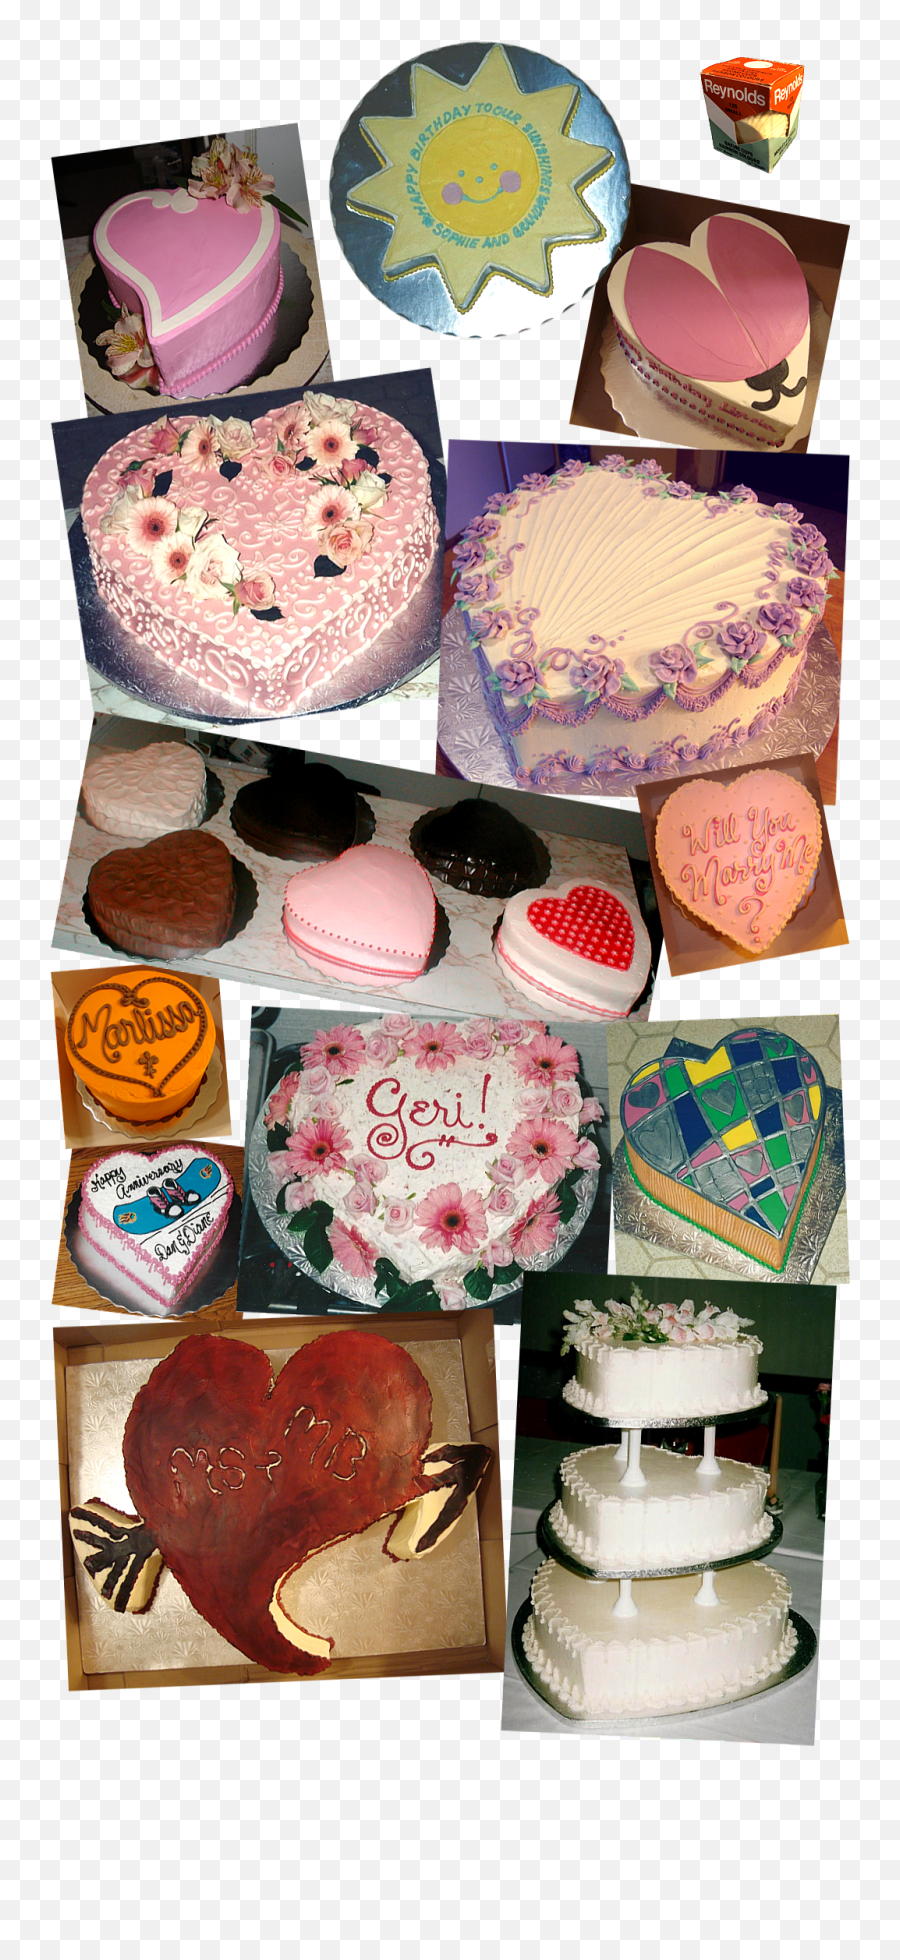 Cakes - Cake Decorating Supply Emoji,3 Inch By 3 Inch Emojis Cake Decoration